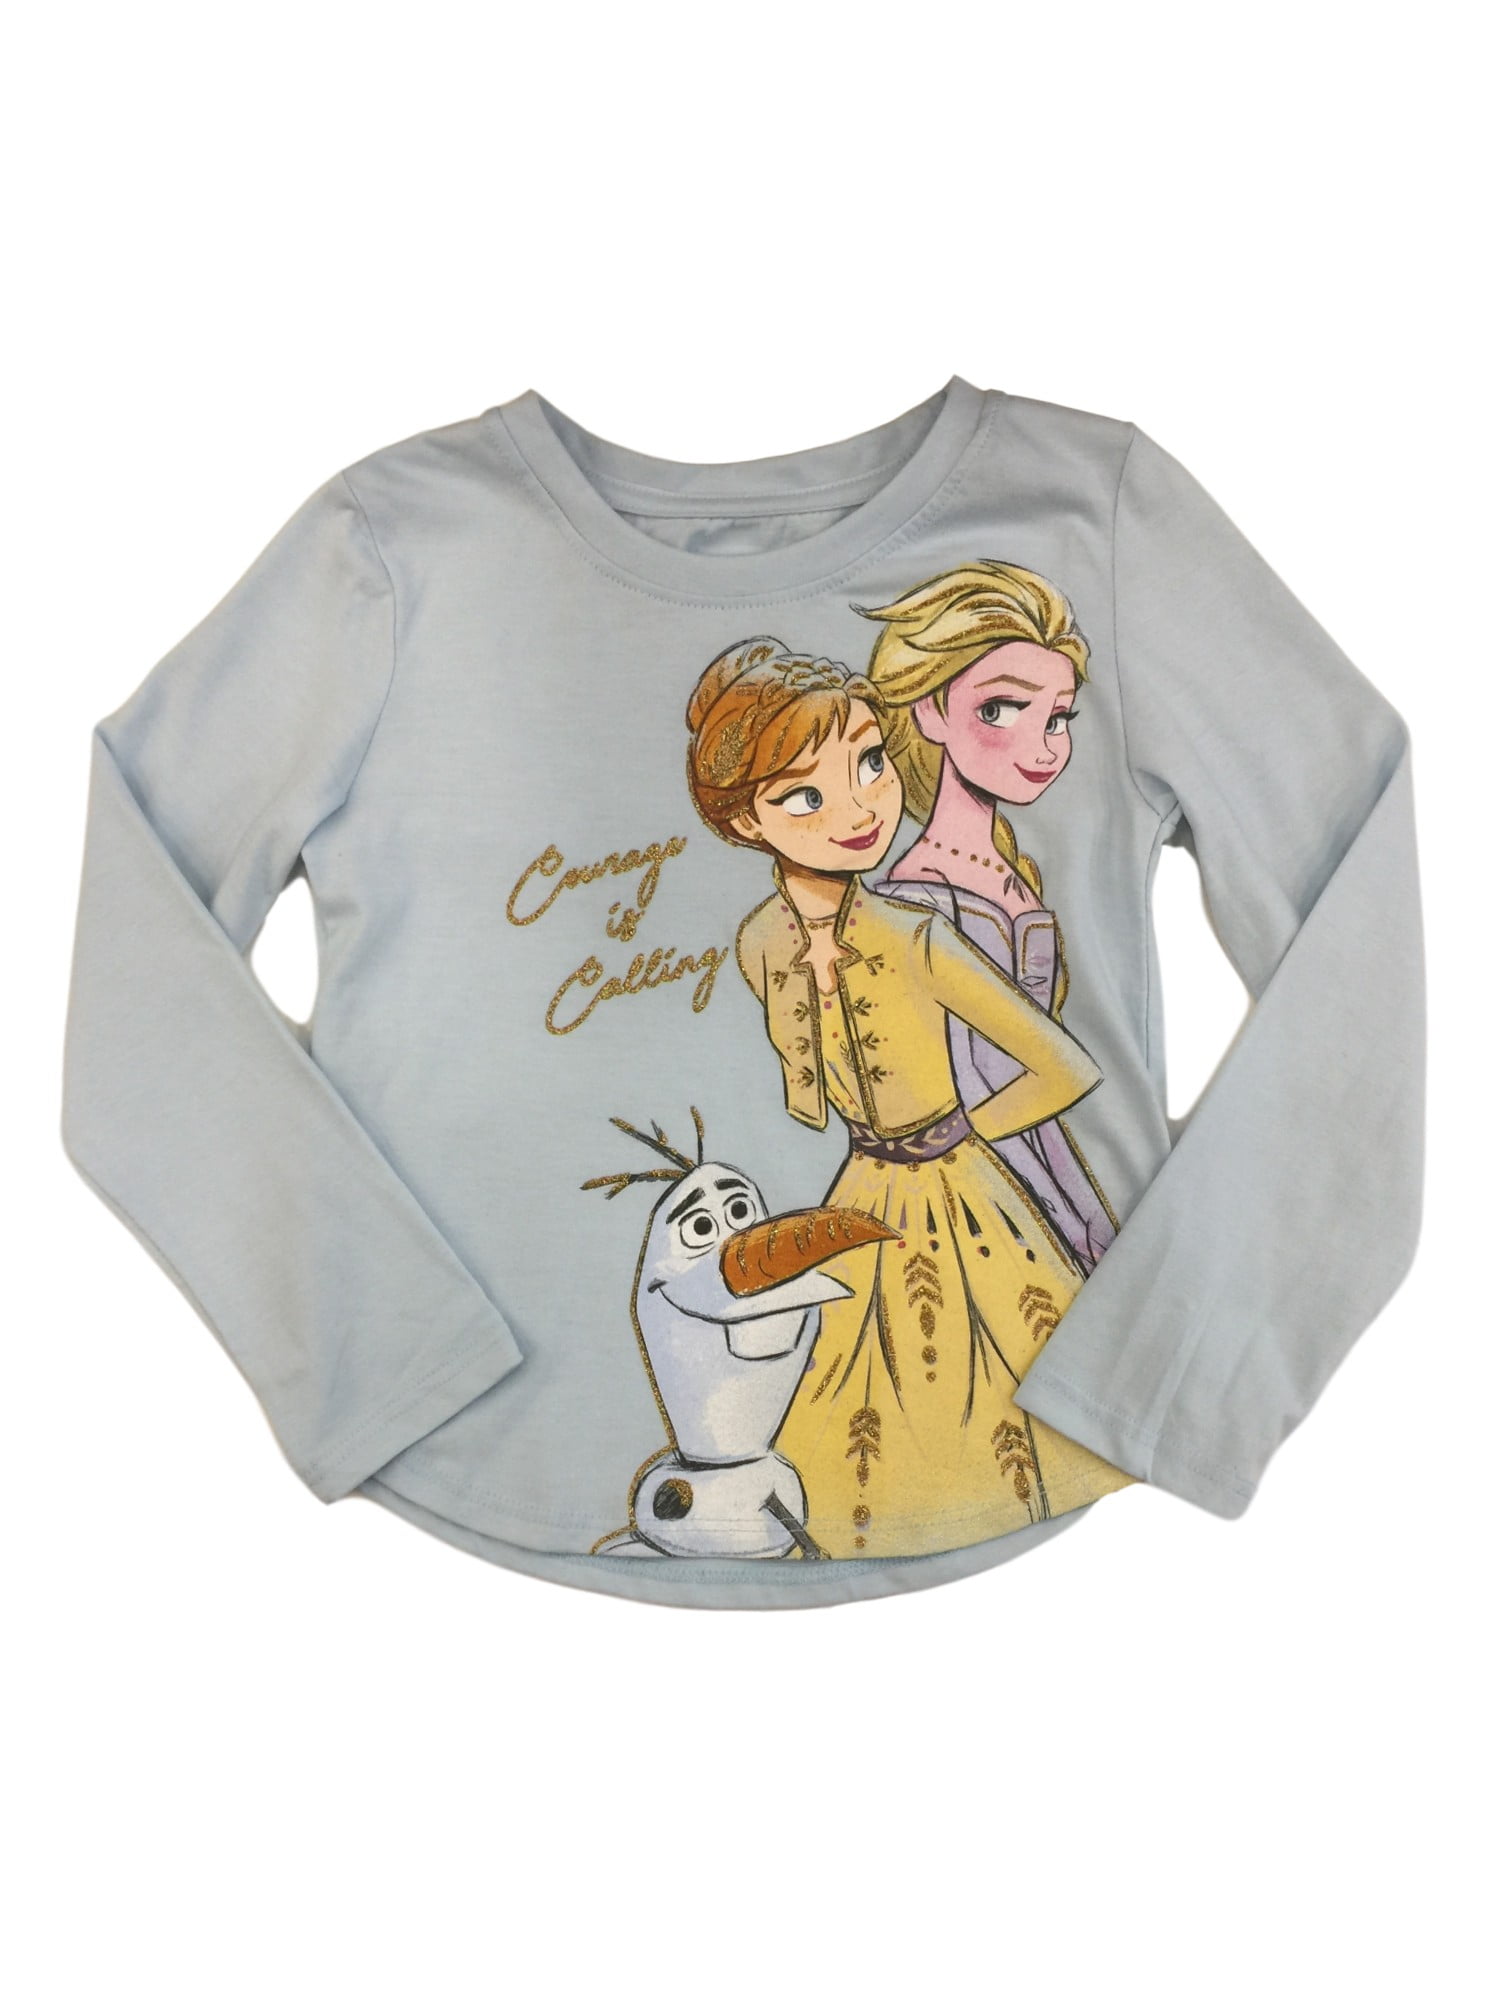 Elsa Anna Frozen Disney World toddler tee shirt Olaf Kristoff